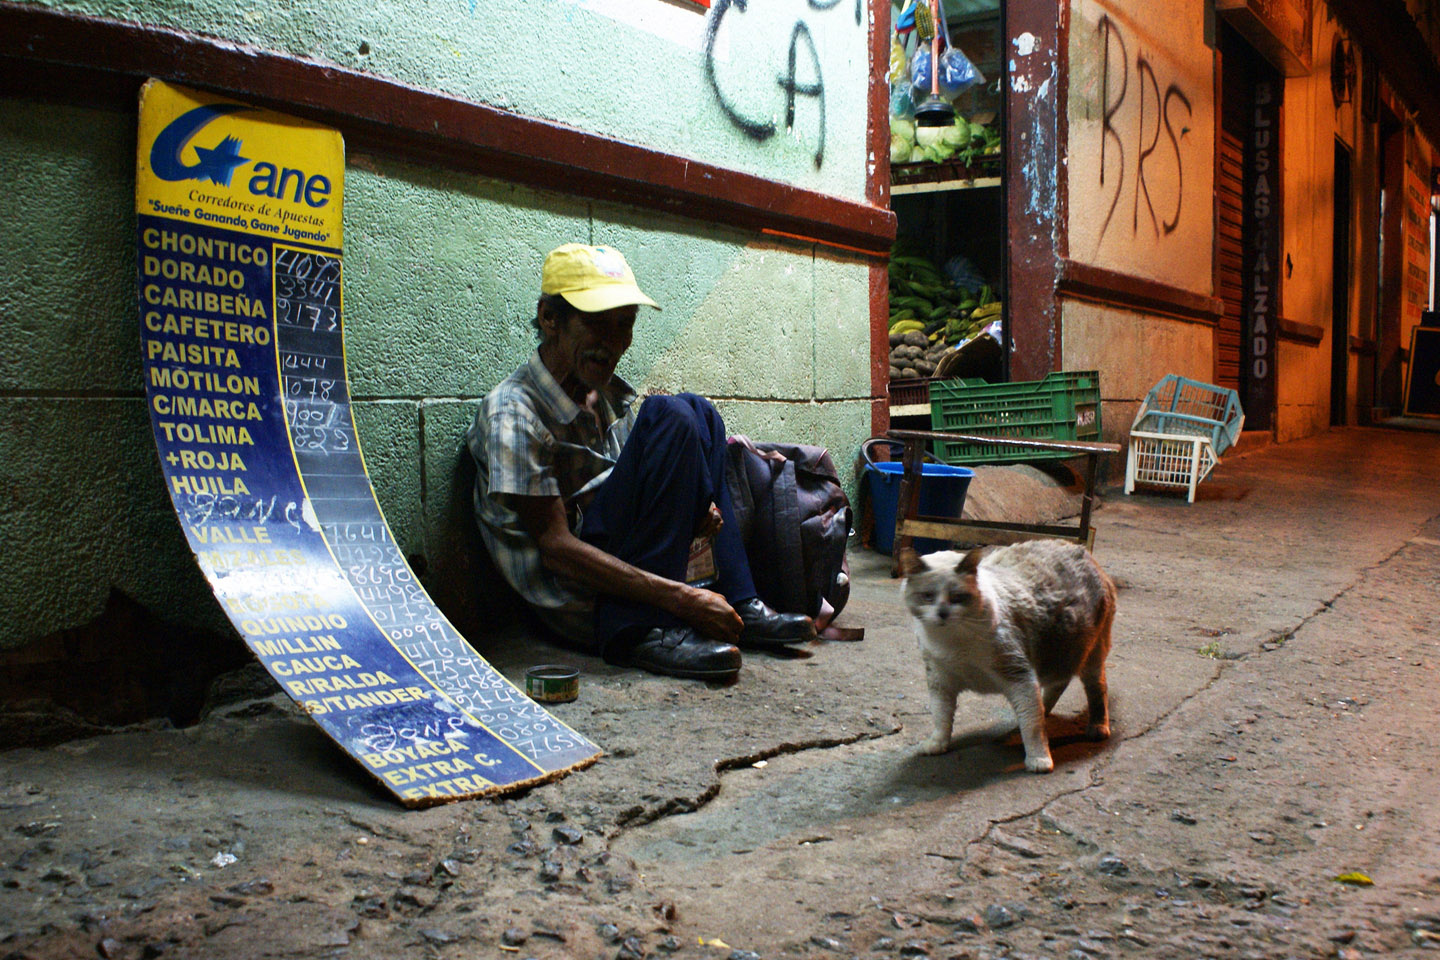 web-colombia-cali-poverty-man-street-vinci-andrc3a9s-belalcc3a1zar-yabur-cc.jpg